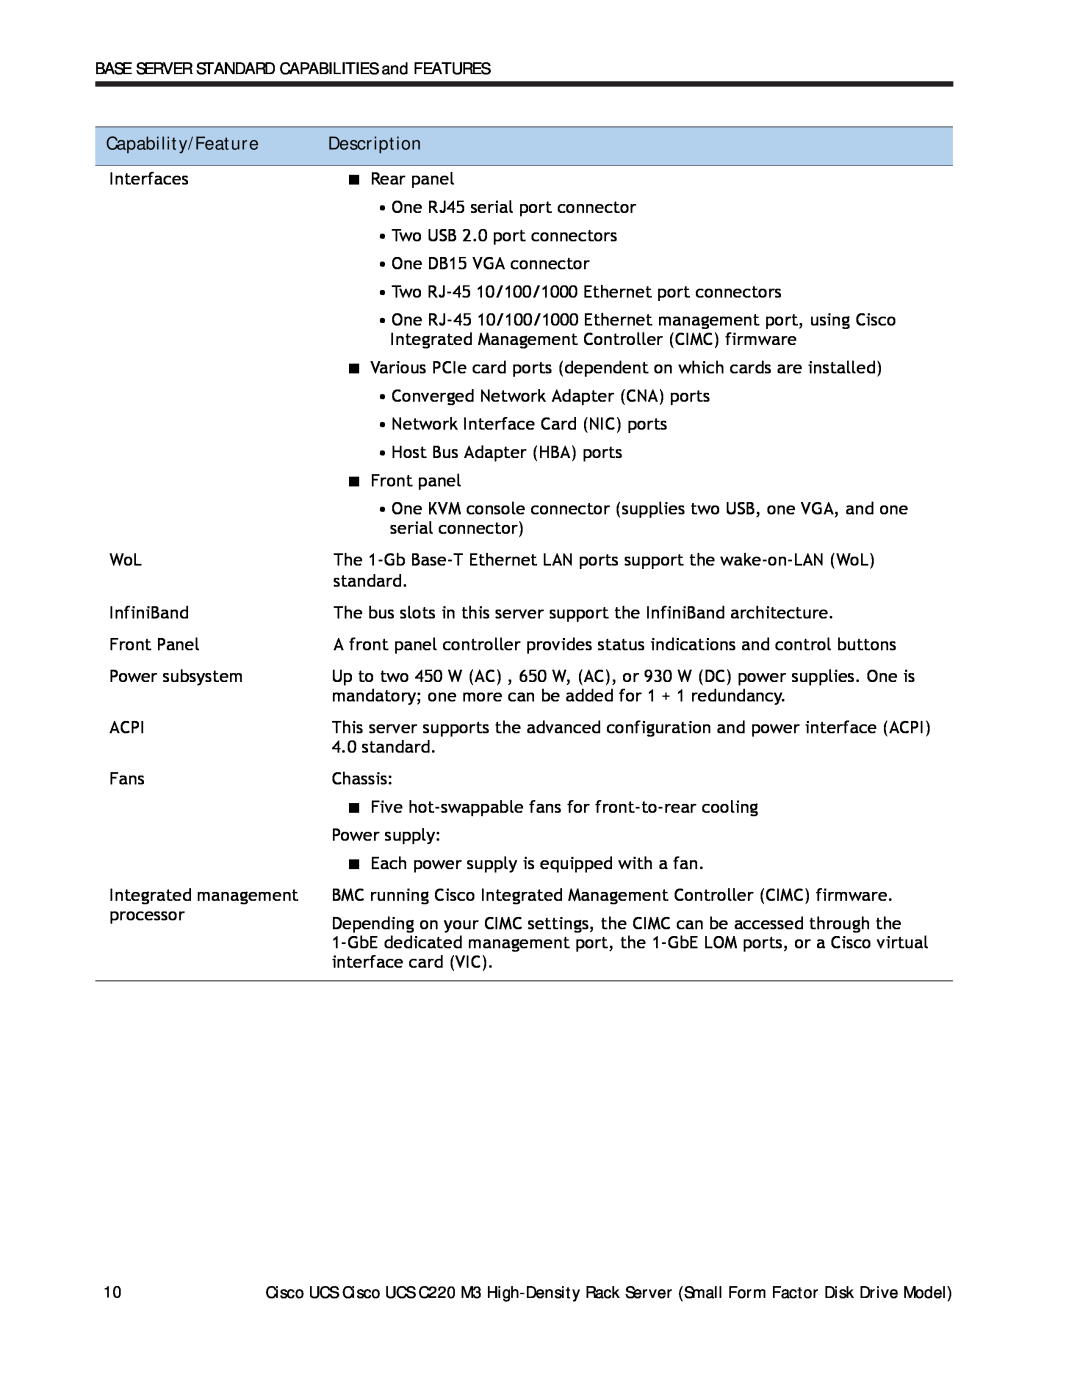 Cisco Systems A03D600GA2 manual Capability/Feature, Description 